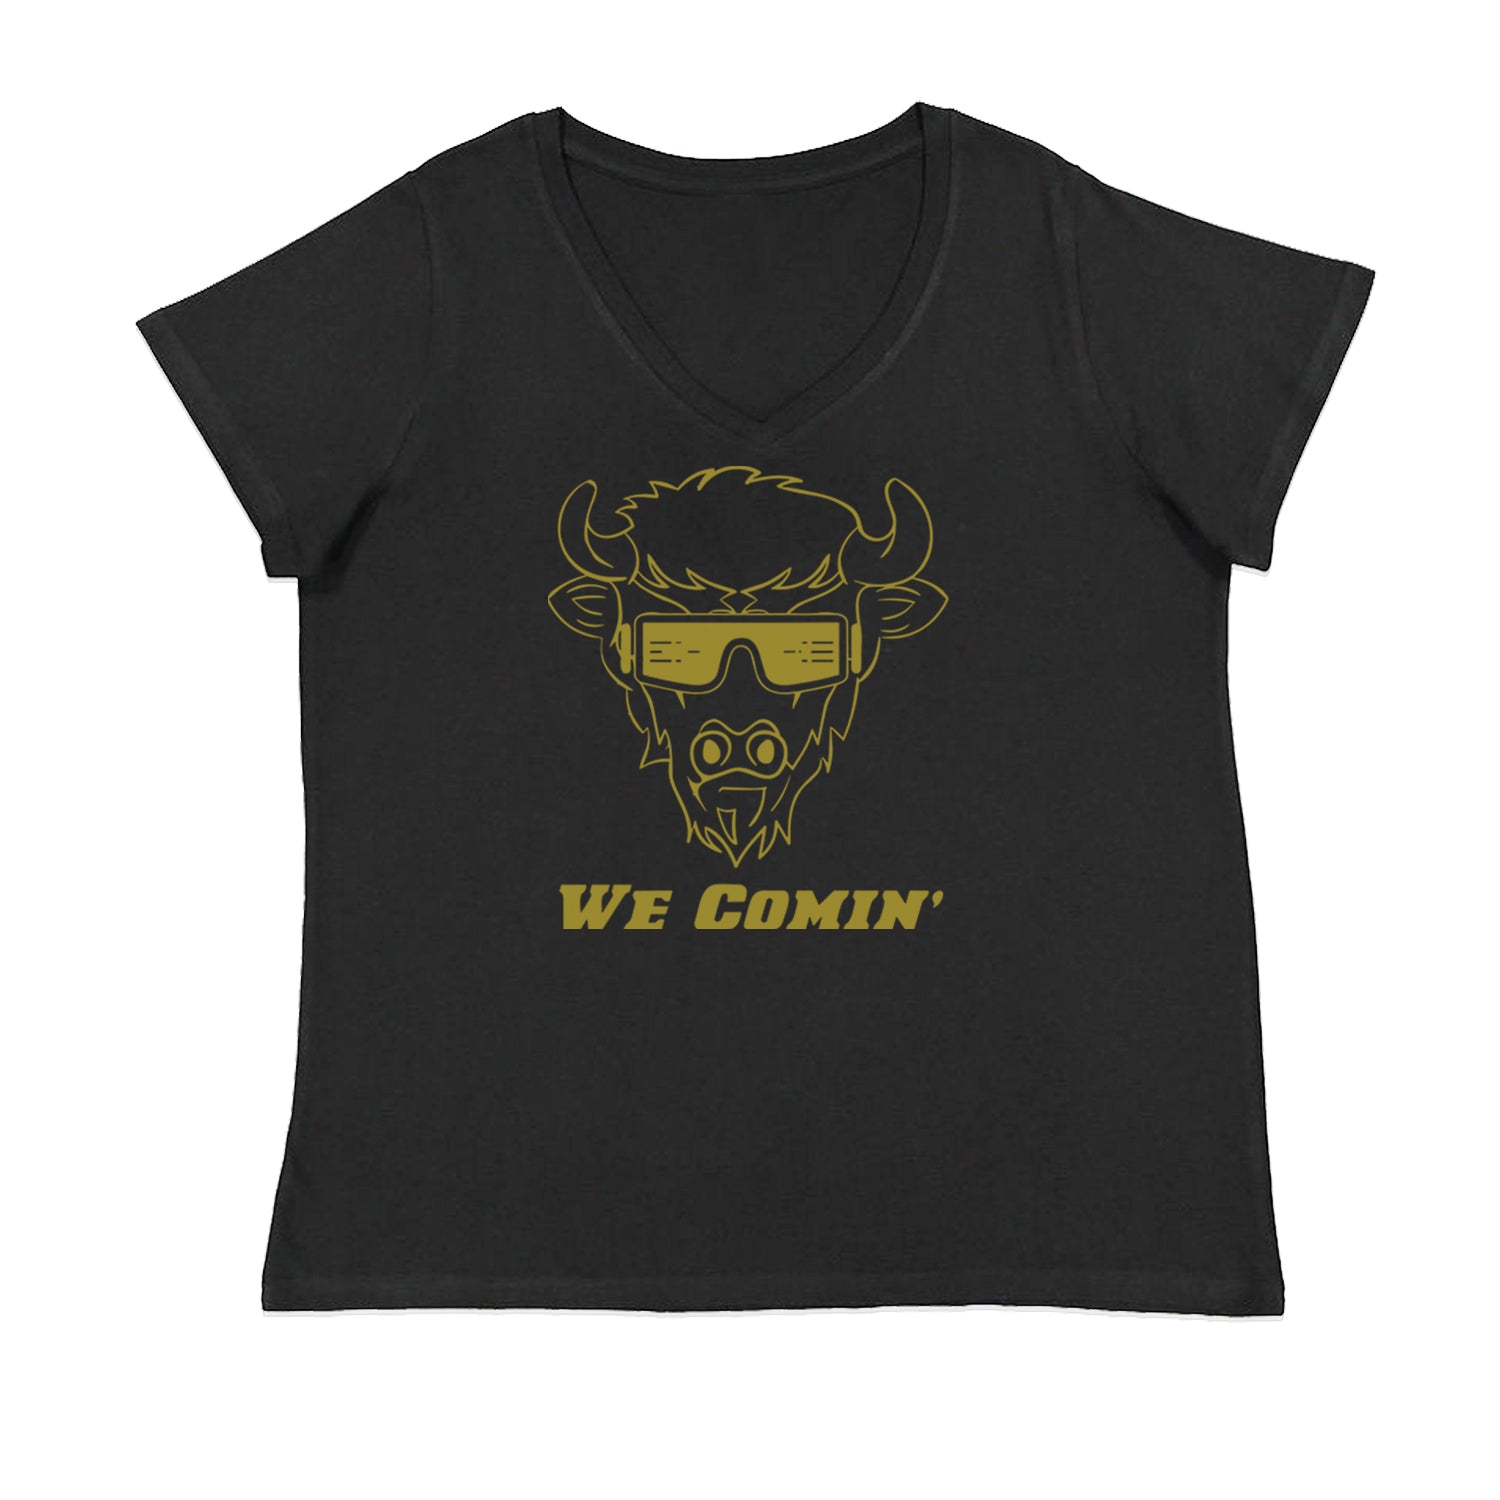 We Coming Coach Prime Colorado Womens Plus Size V-Neck T-shirt